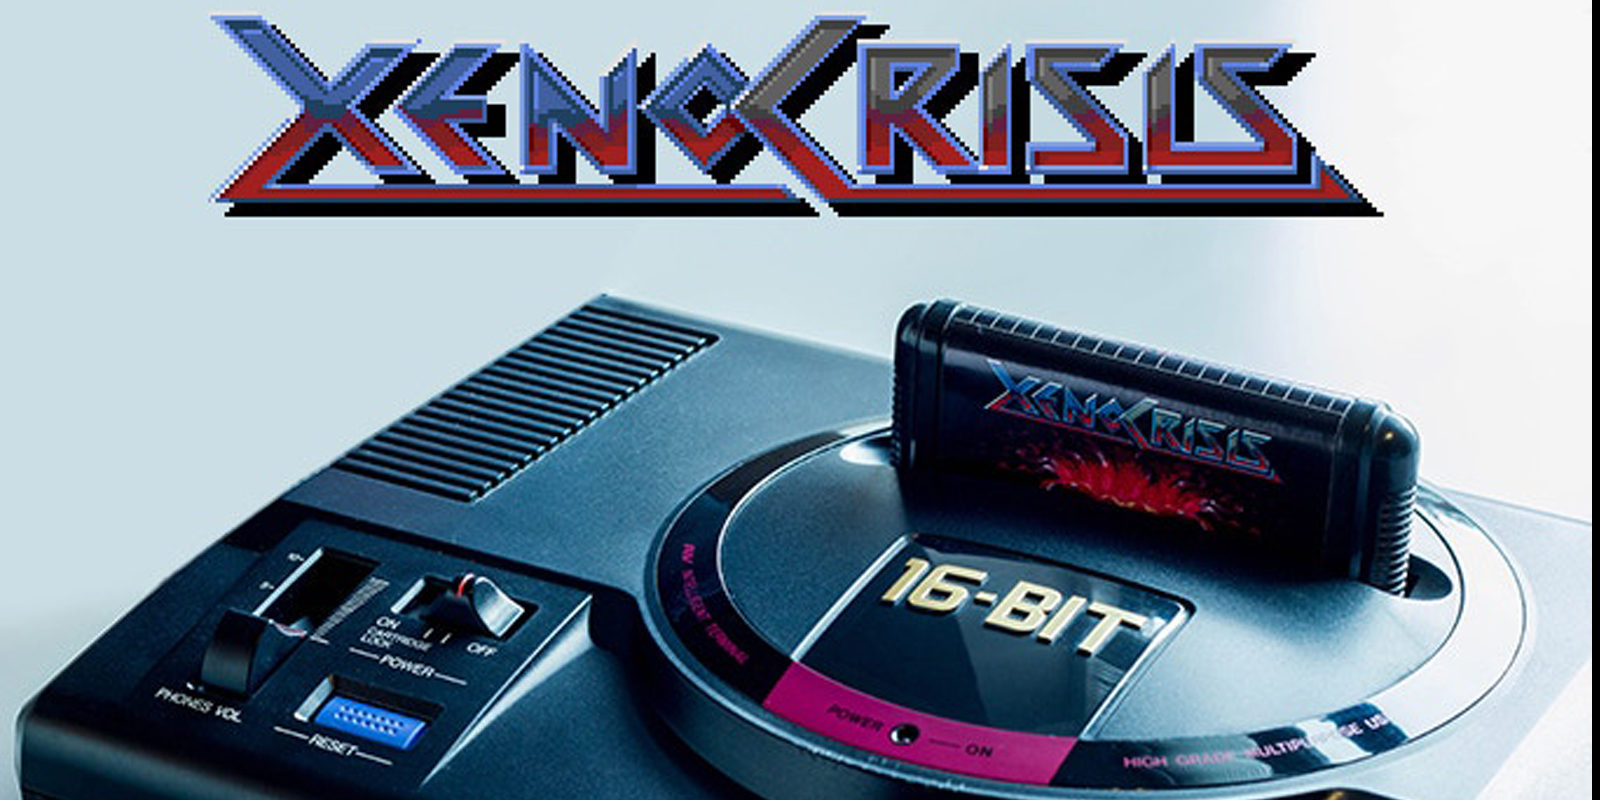 Llega un nuevo juego para Sega Mega Drive: 'Xeno Crisis'